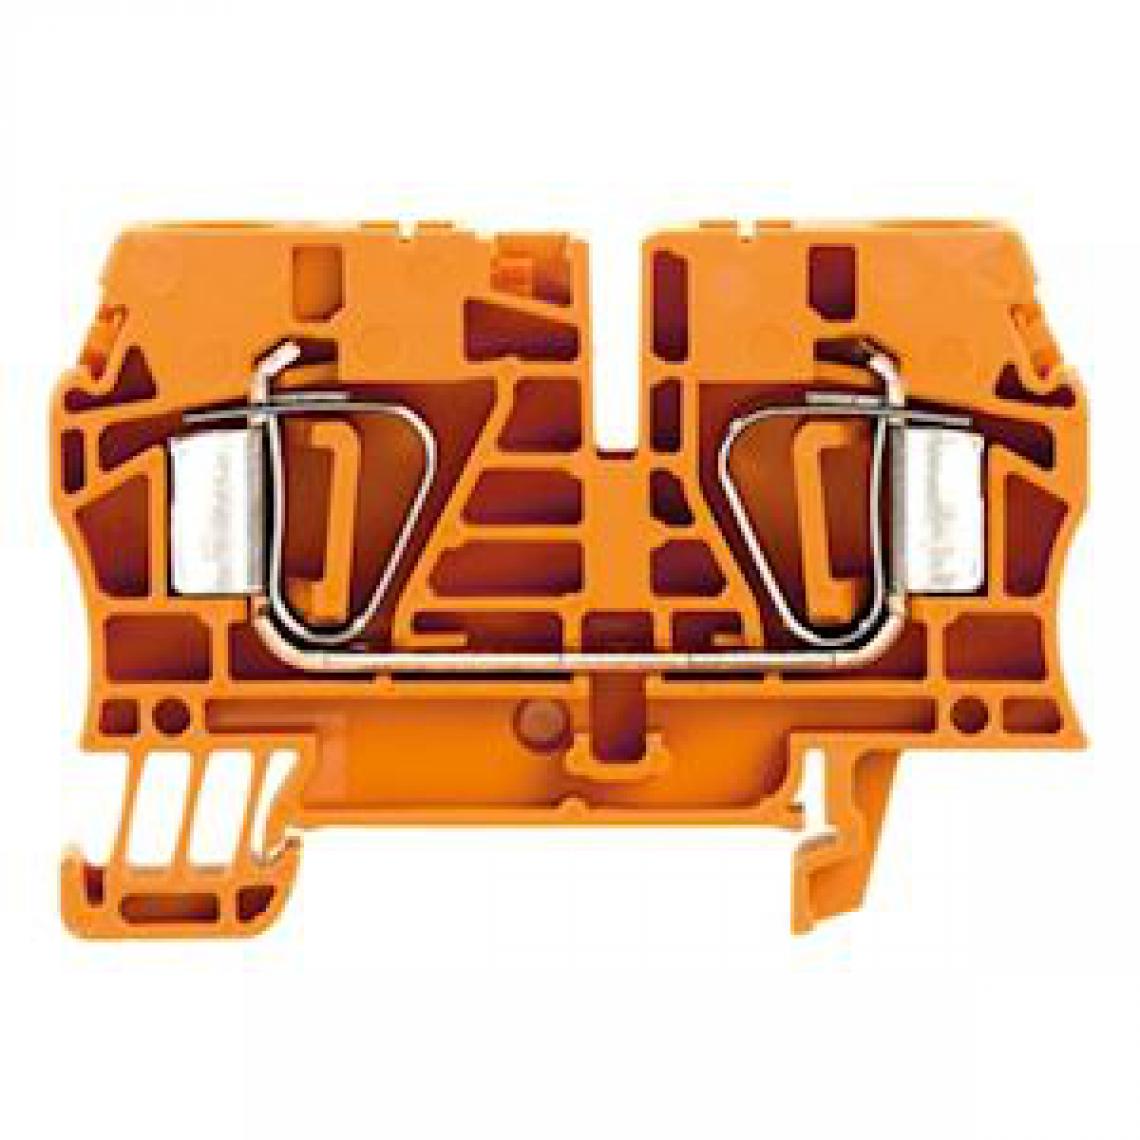 Weidmuller - bloc de jonction - passage - a ressort - zdu - 6 mm2 - 800v - 41a - orange - weidmuller 1636820000 - Autres équipements modulaires